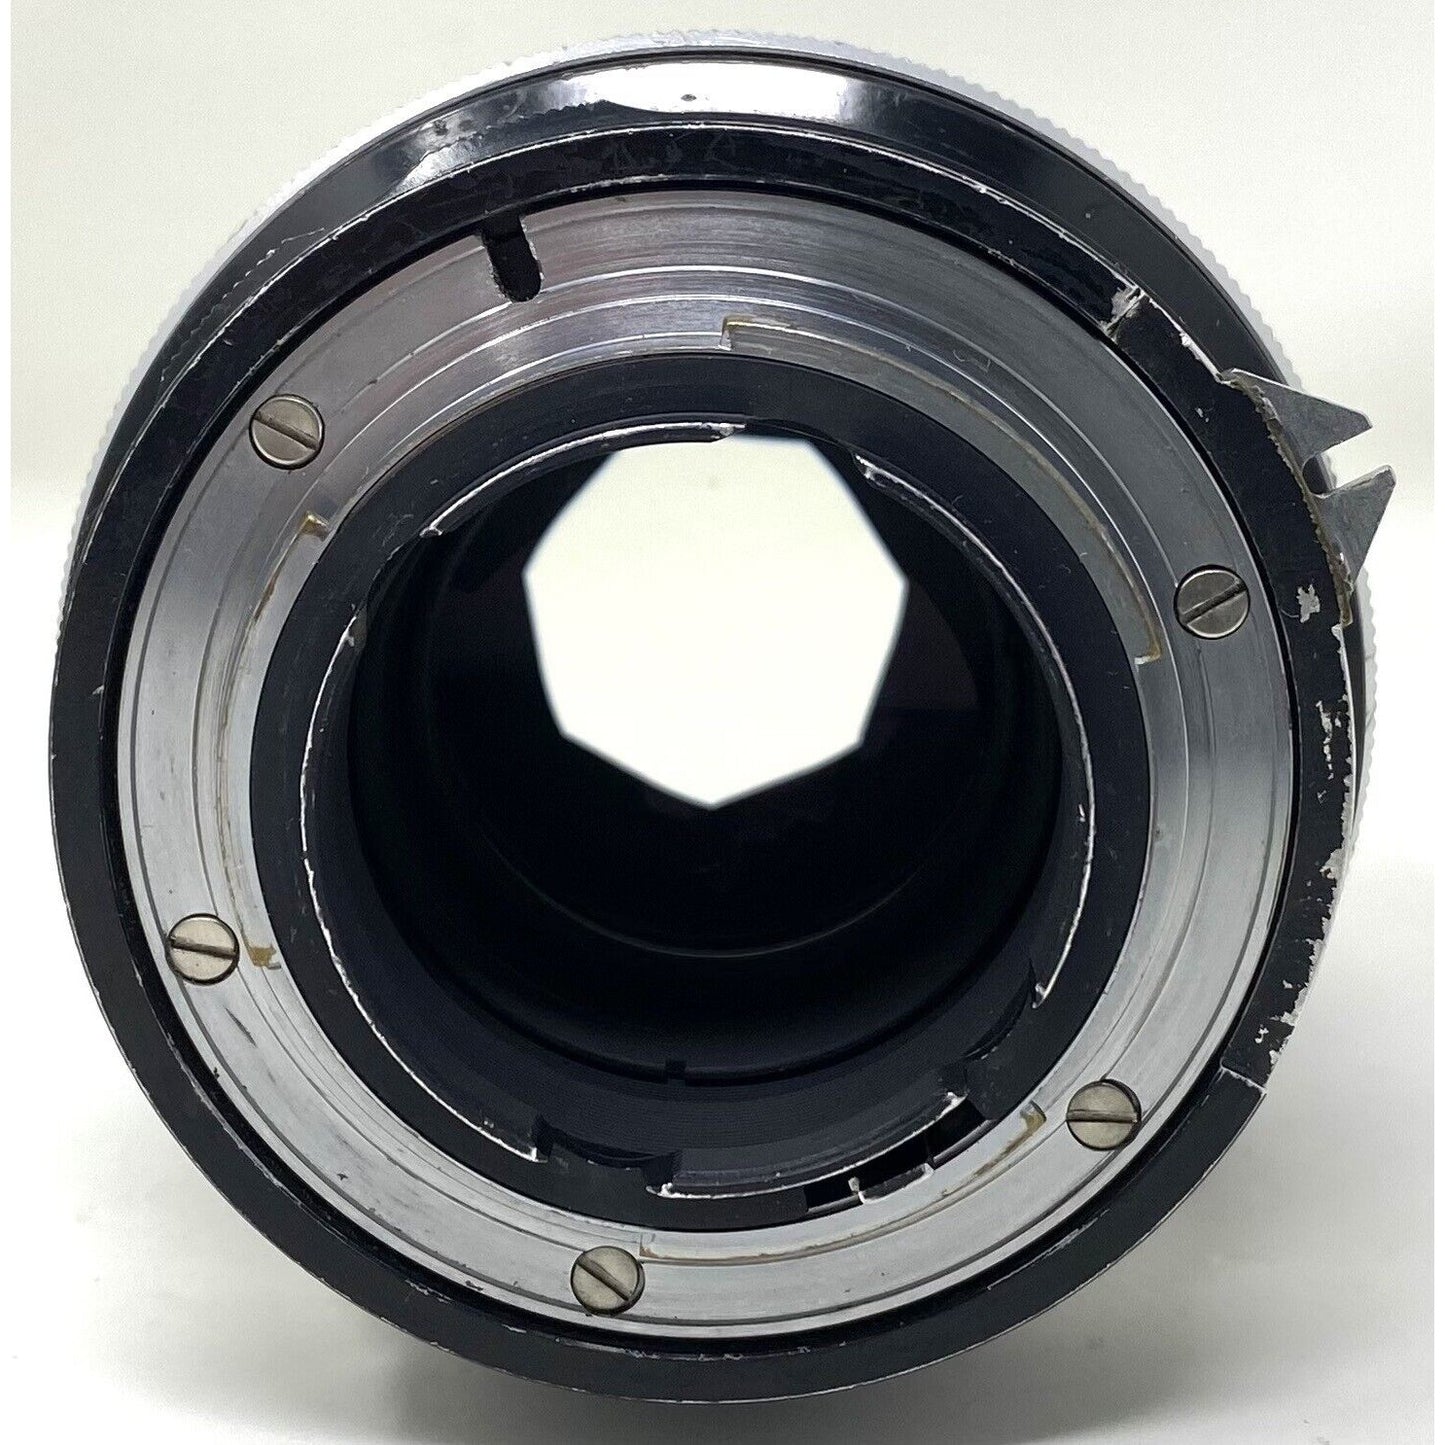 Nippon Kogaku NIKON Nikkor-Q Auto 135mm f/2.8 Telephoto Manual Non-Ai Lens